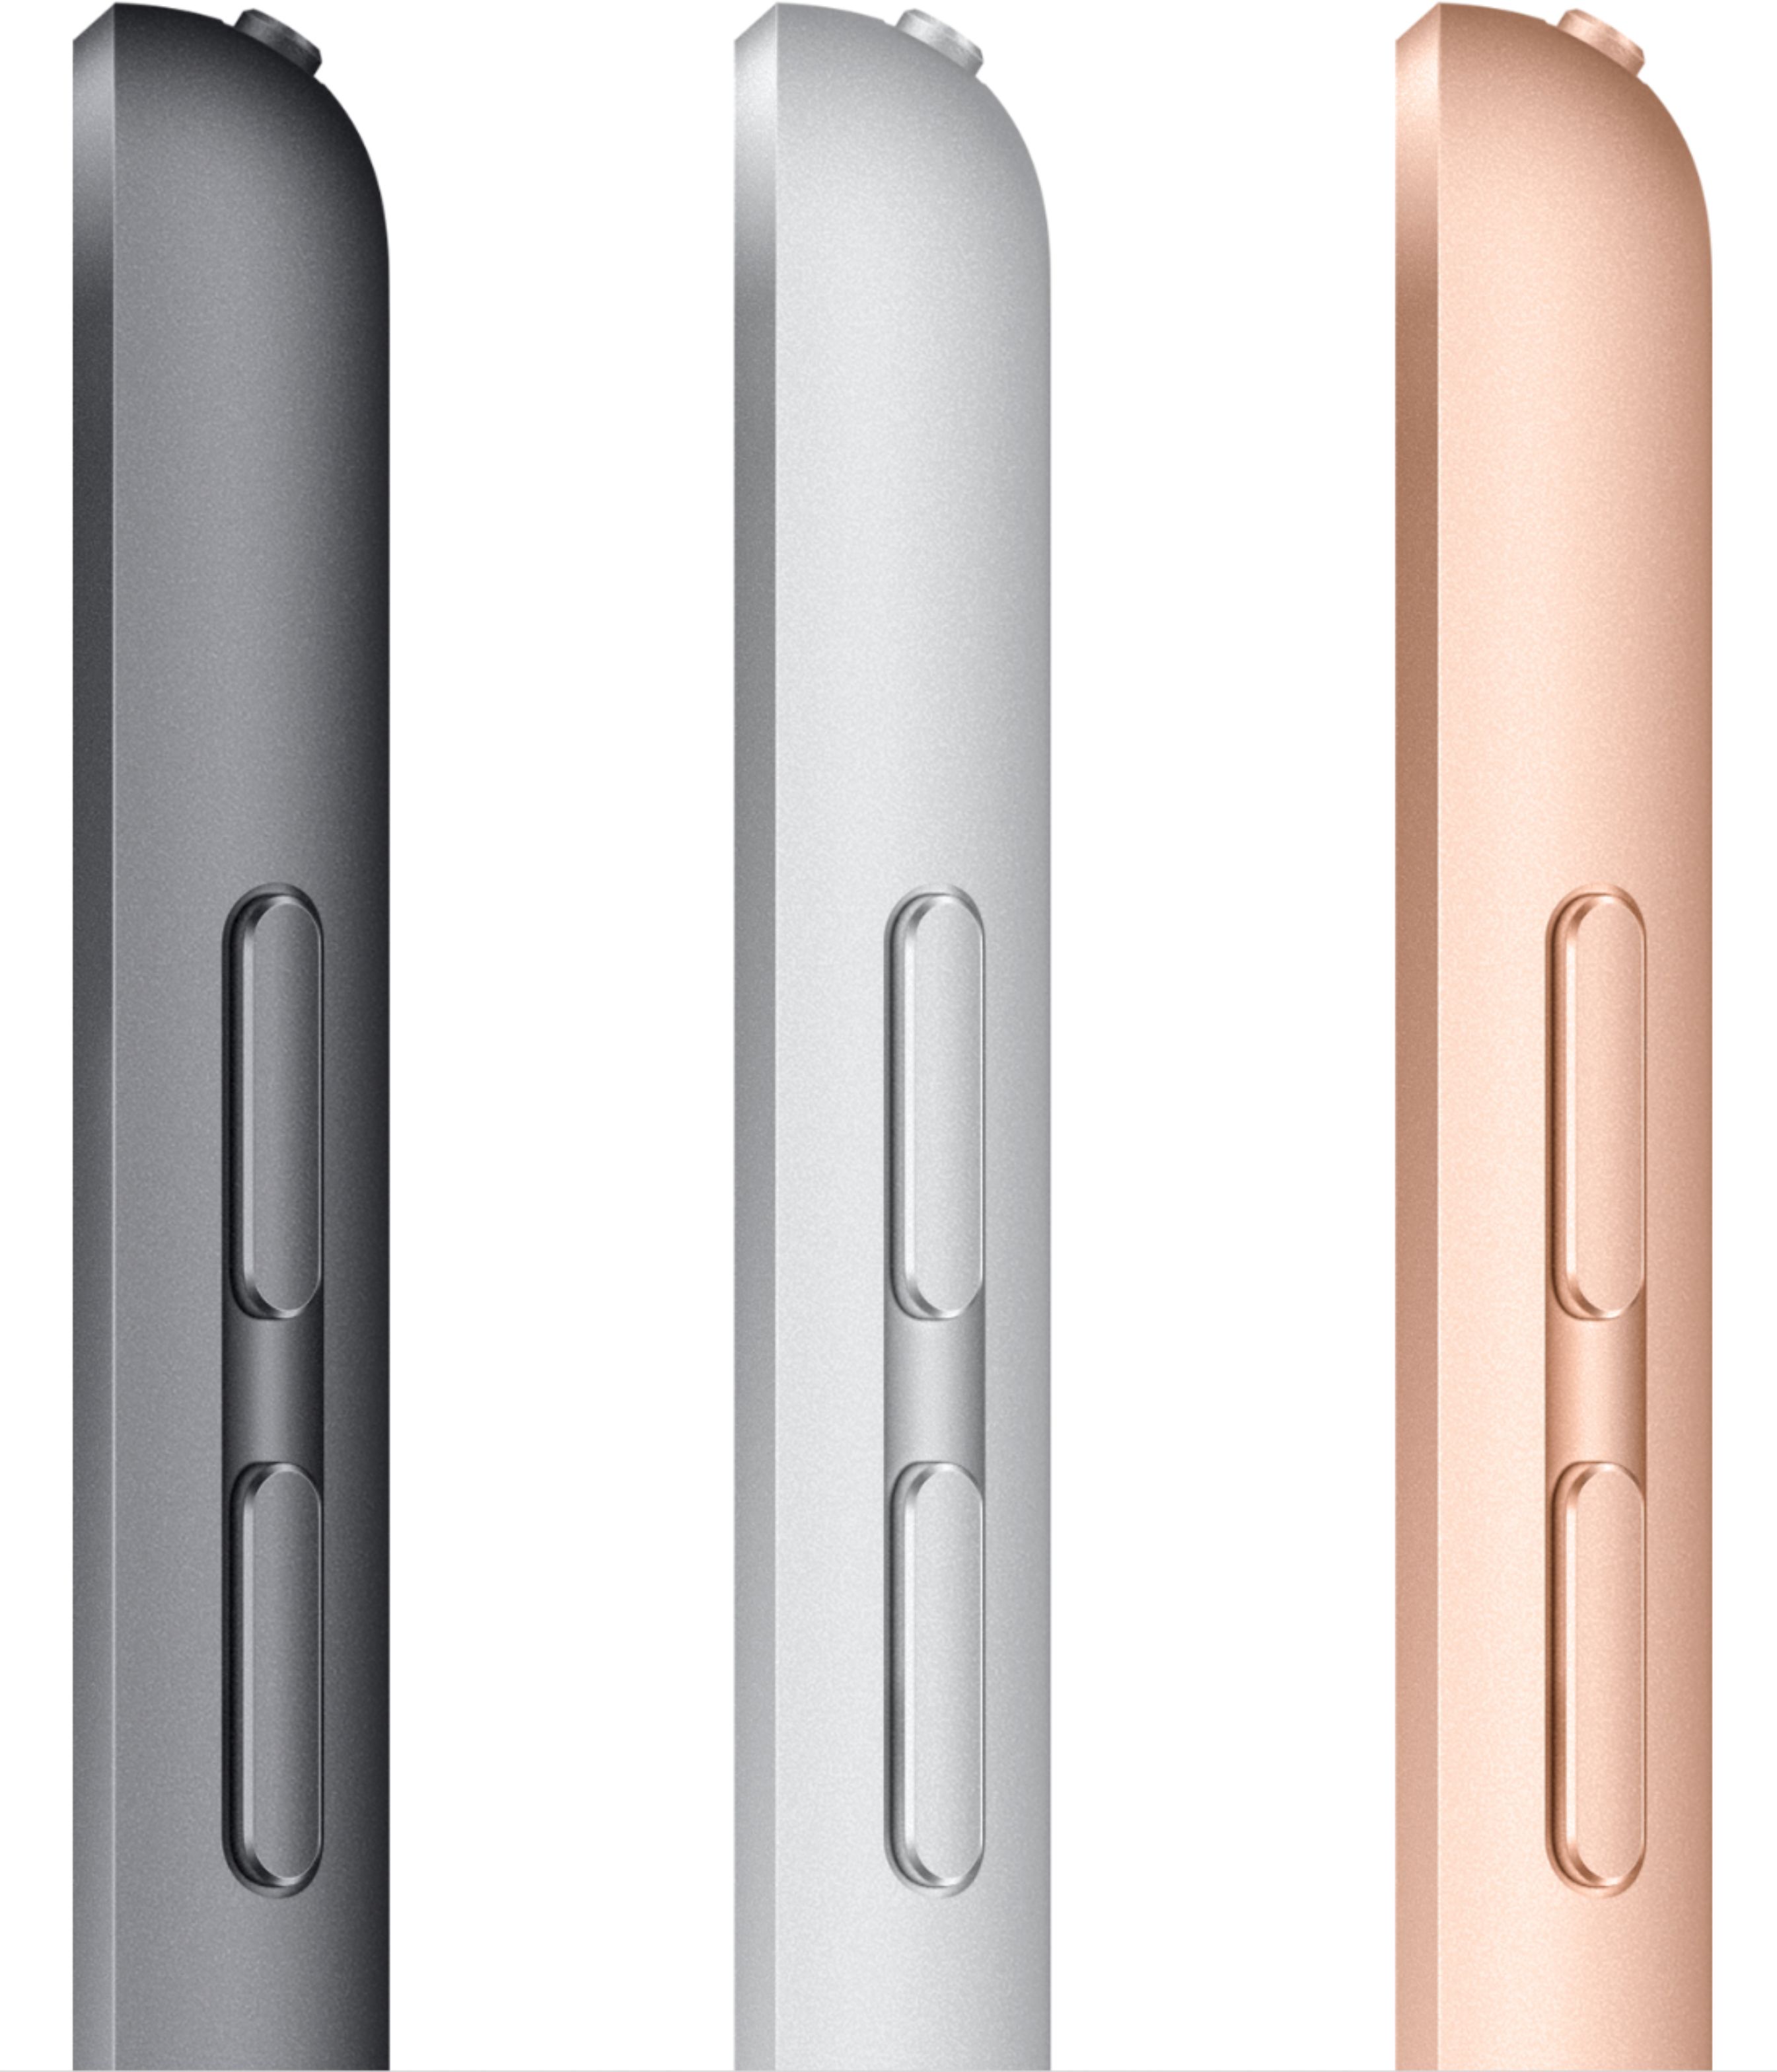 Best Buy: Apple 10.2-Inch iPad (8th Generation) with Wi-Fi 128GB 